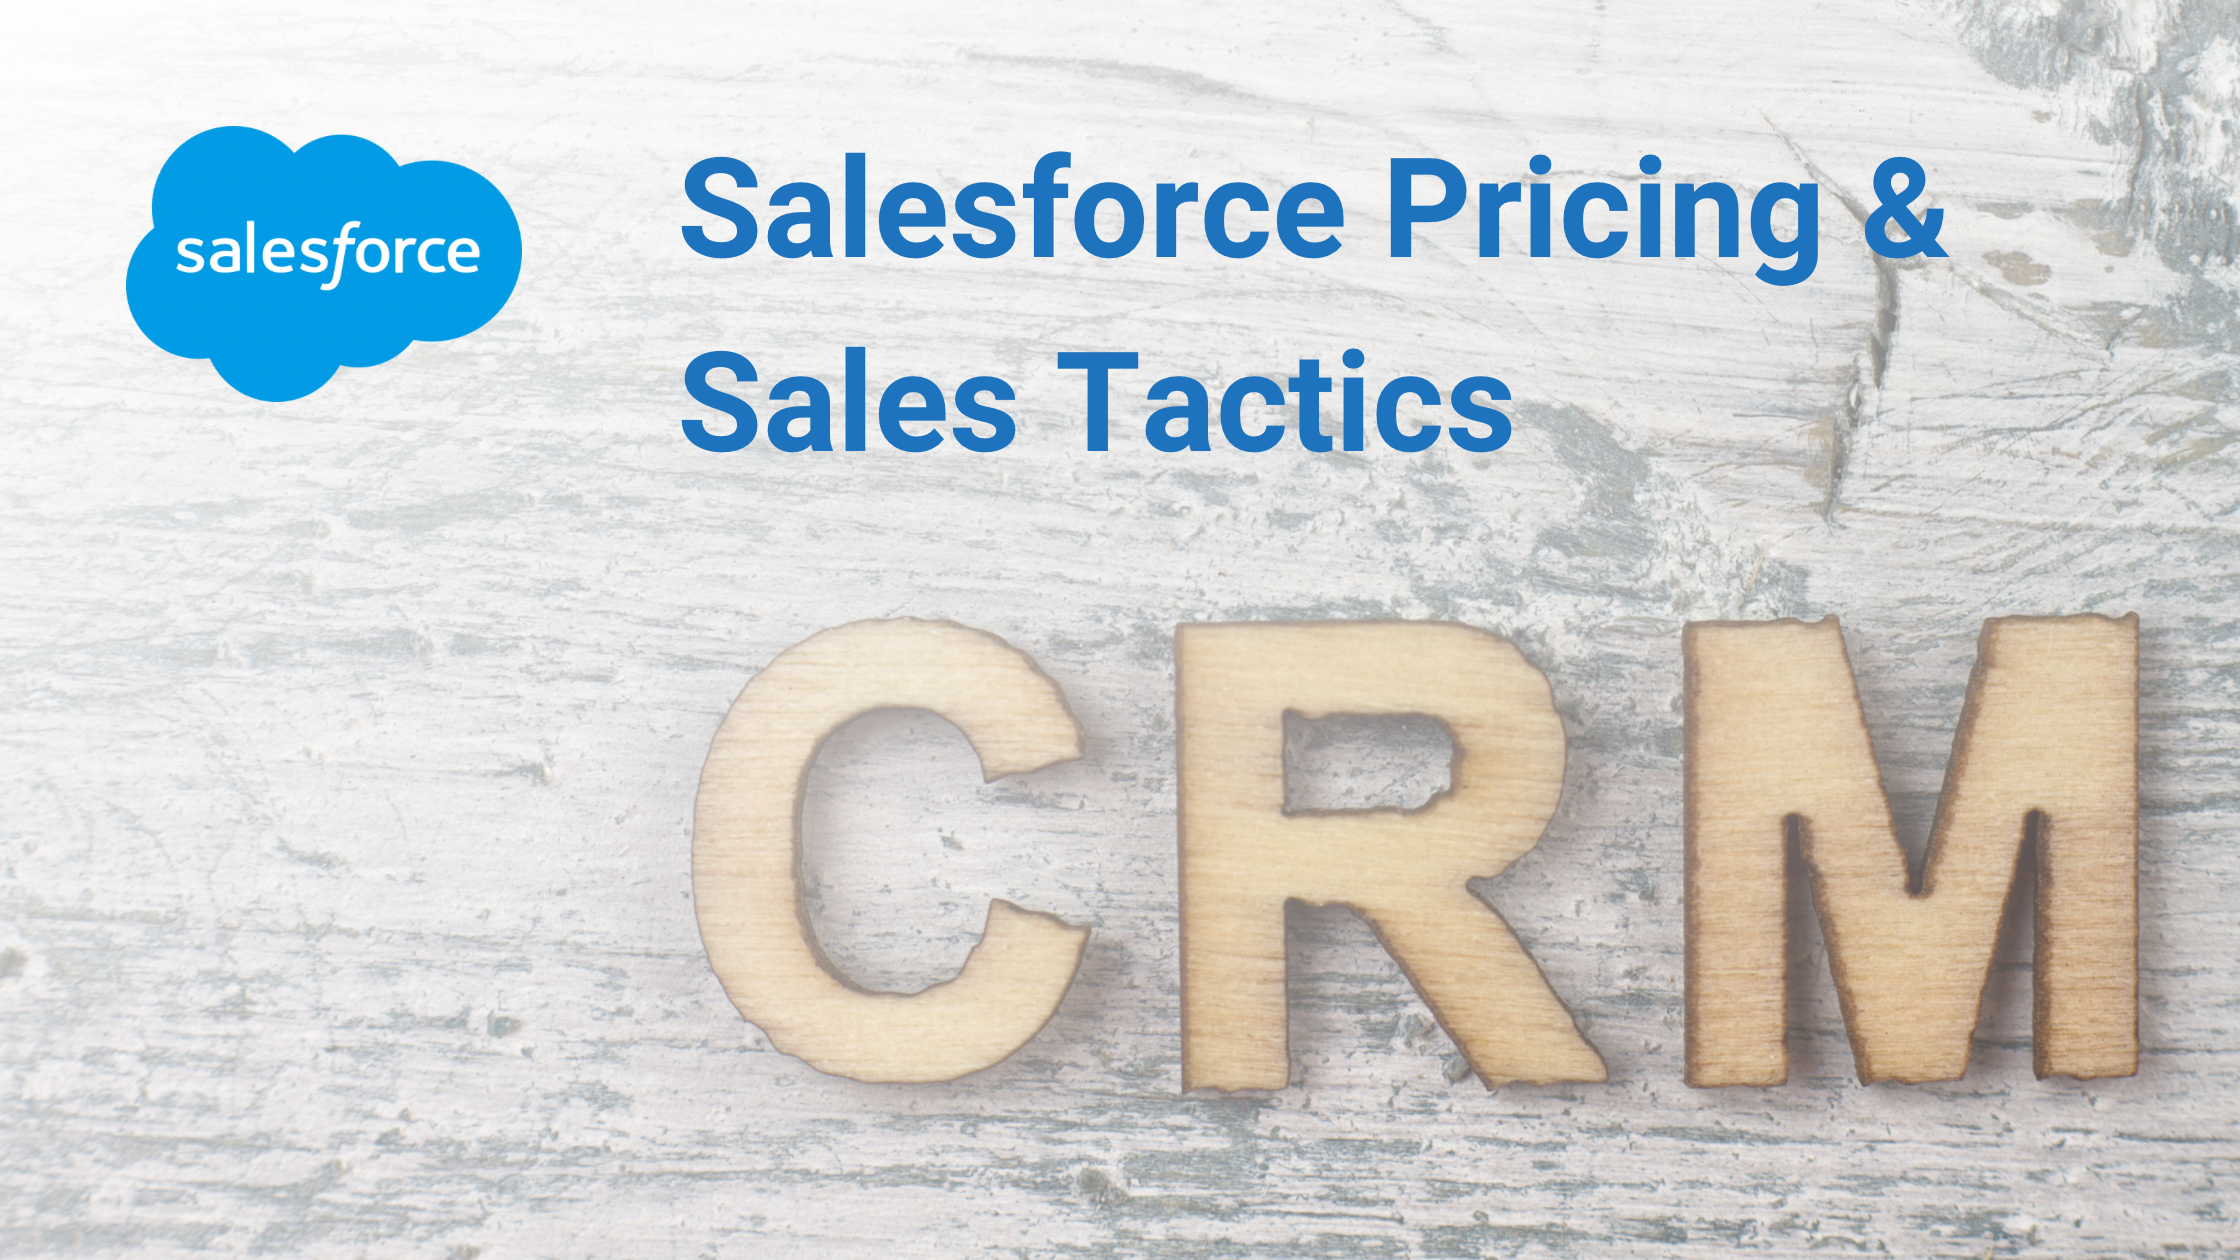 Salesforce Pricing & Sales Tactics